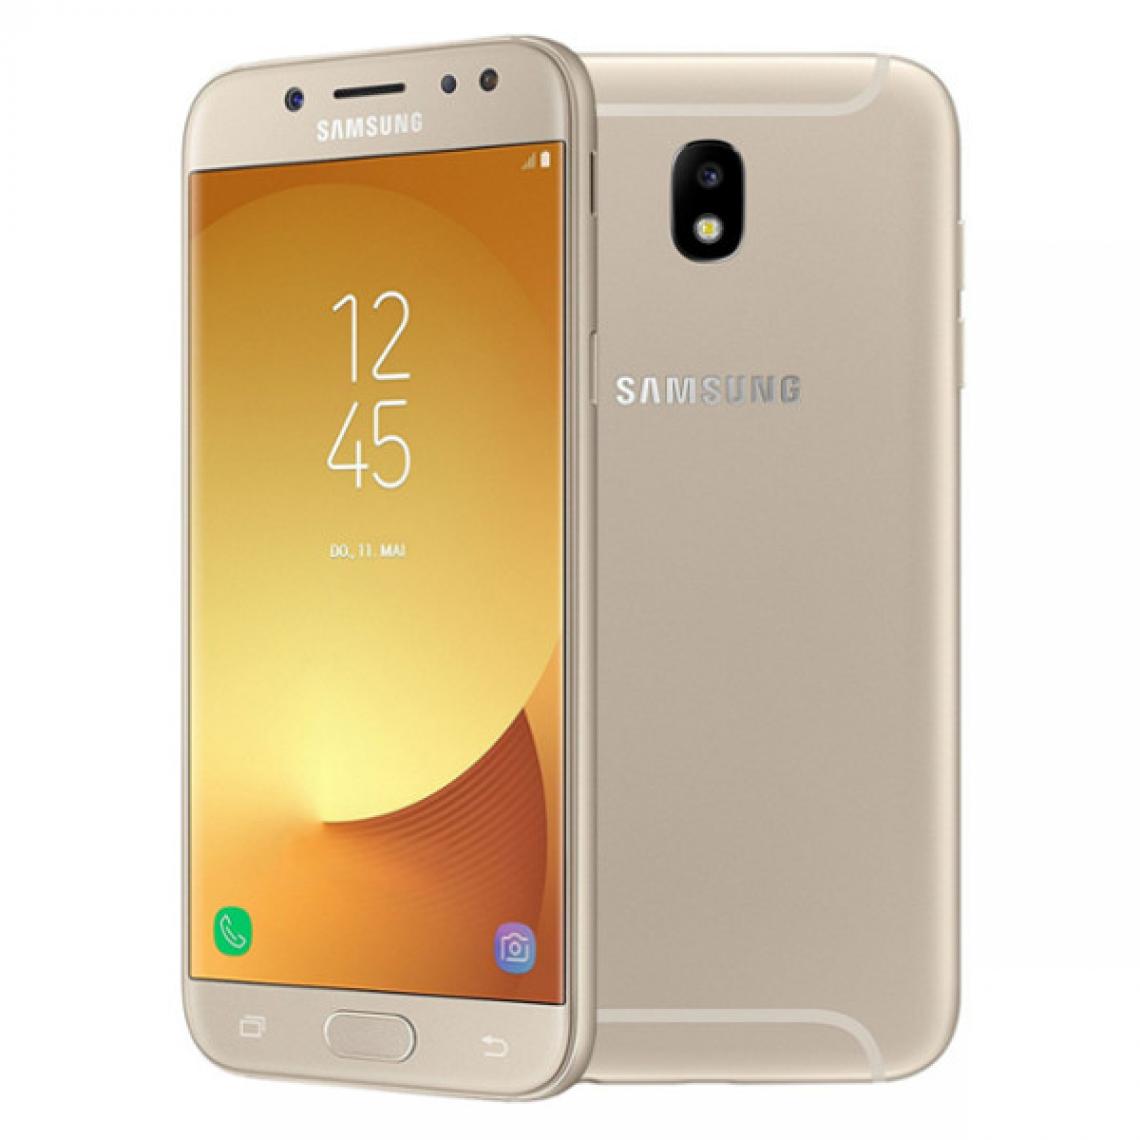 Samsung - Samsung Galaxy J5 (2017) Oro Dual SIM J530 - Smartphone Android